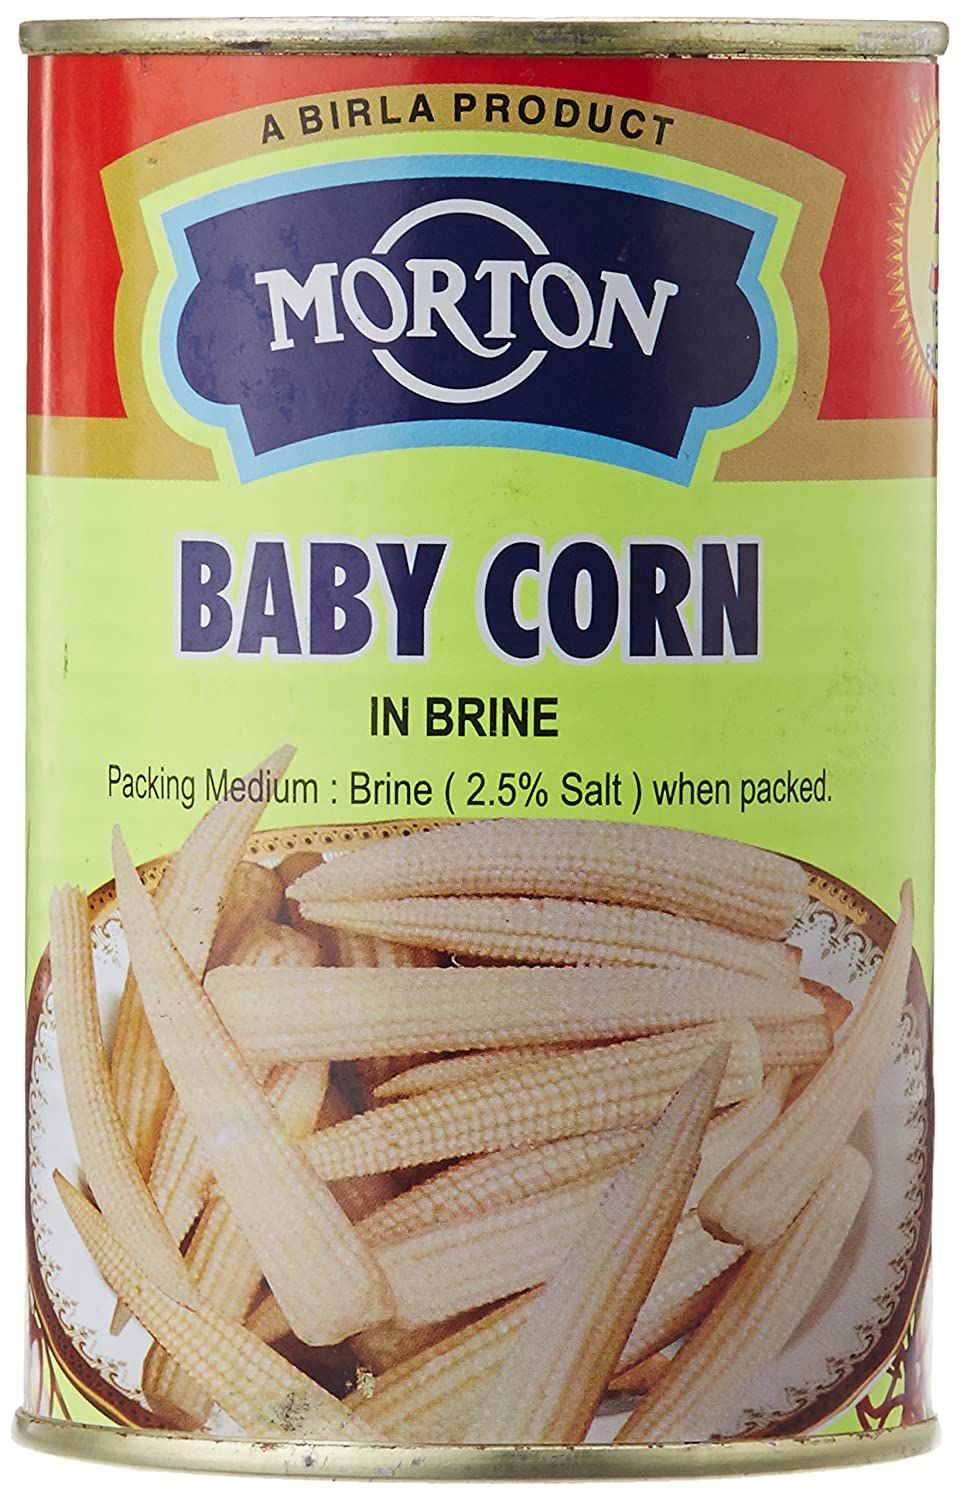 Morton Baby Corn Image